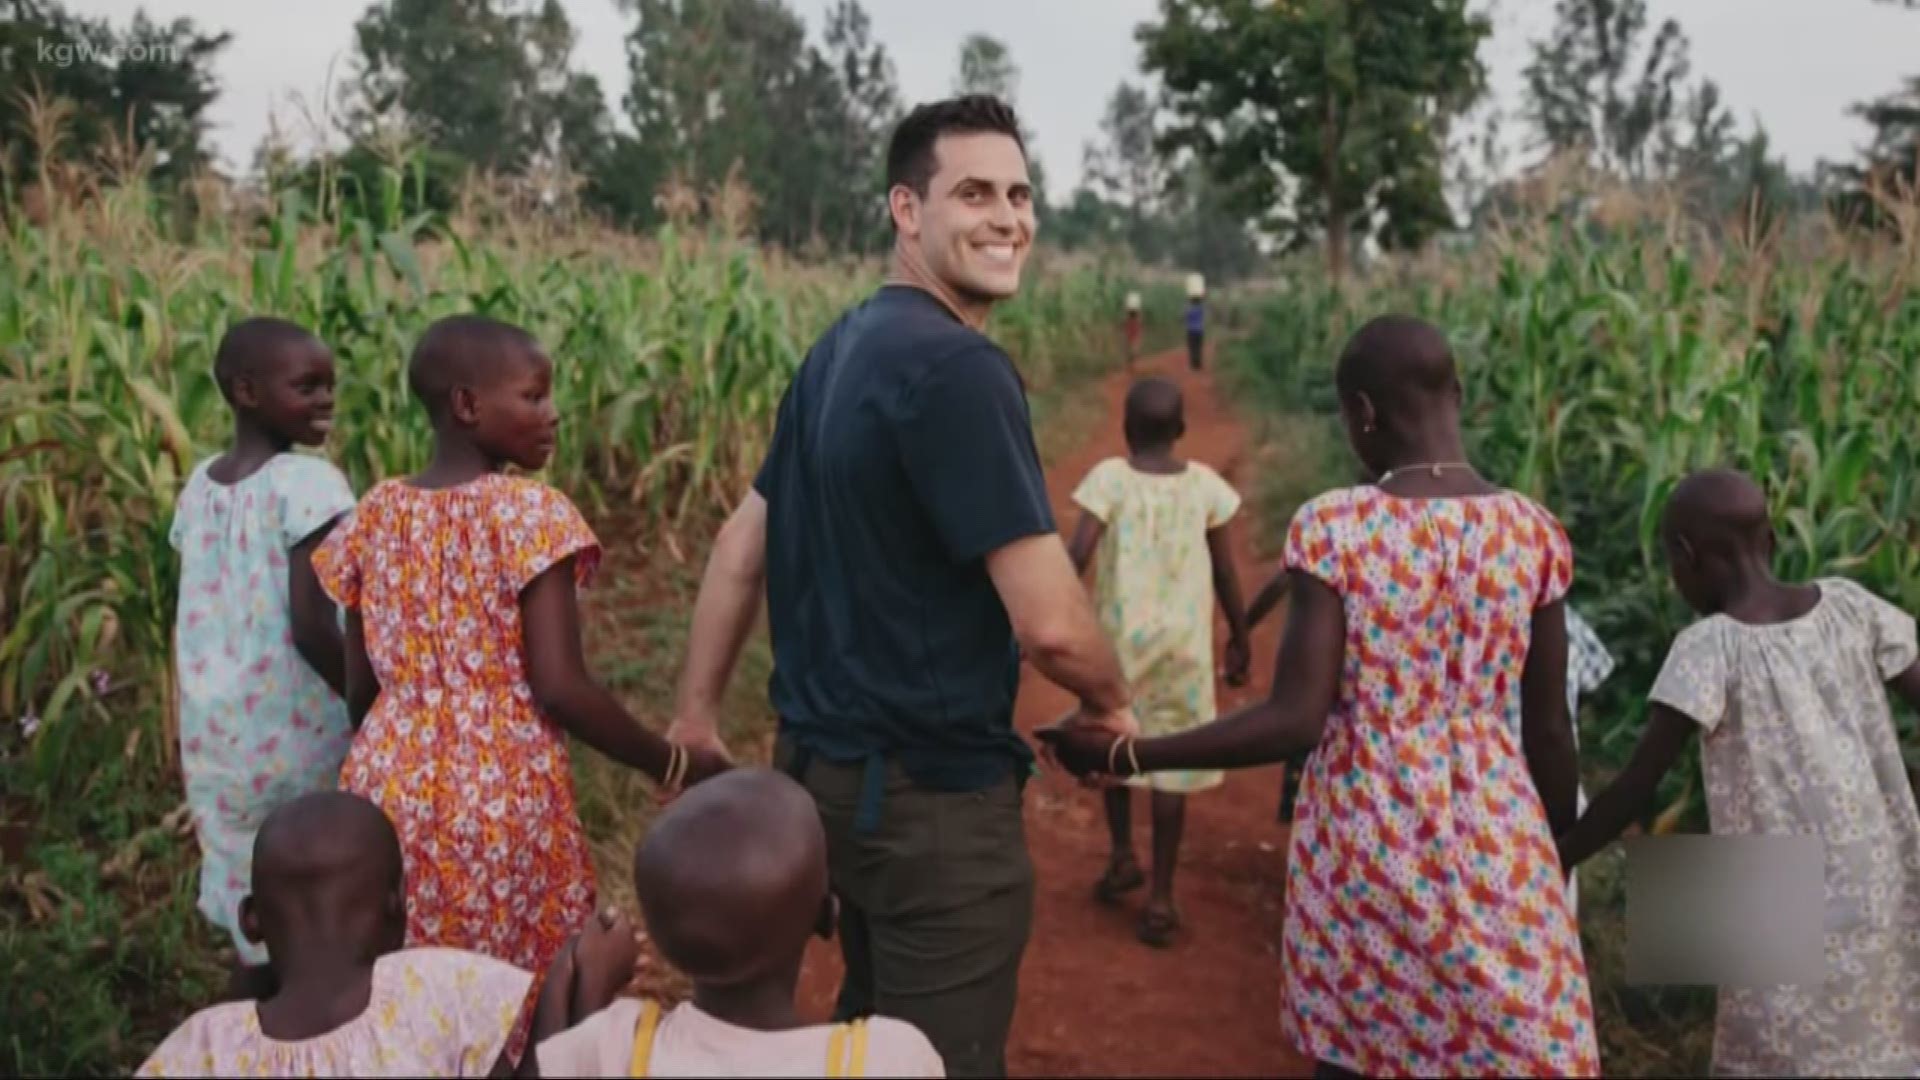 Former Oregon State, now Tigers pitcher helps children in Uganda